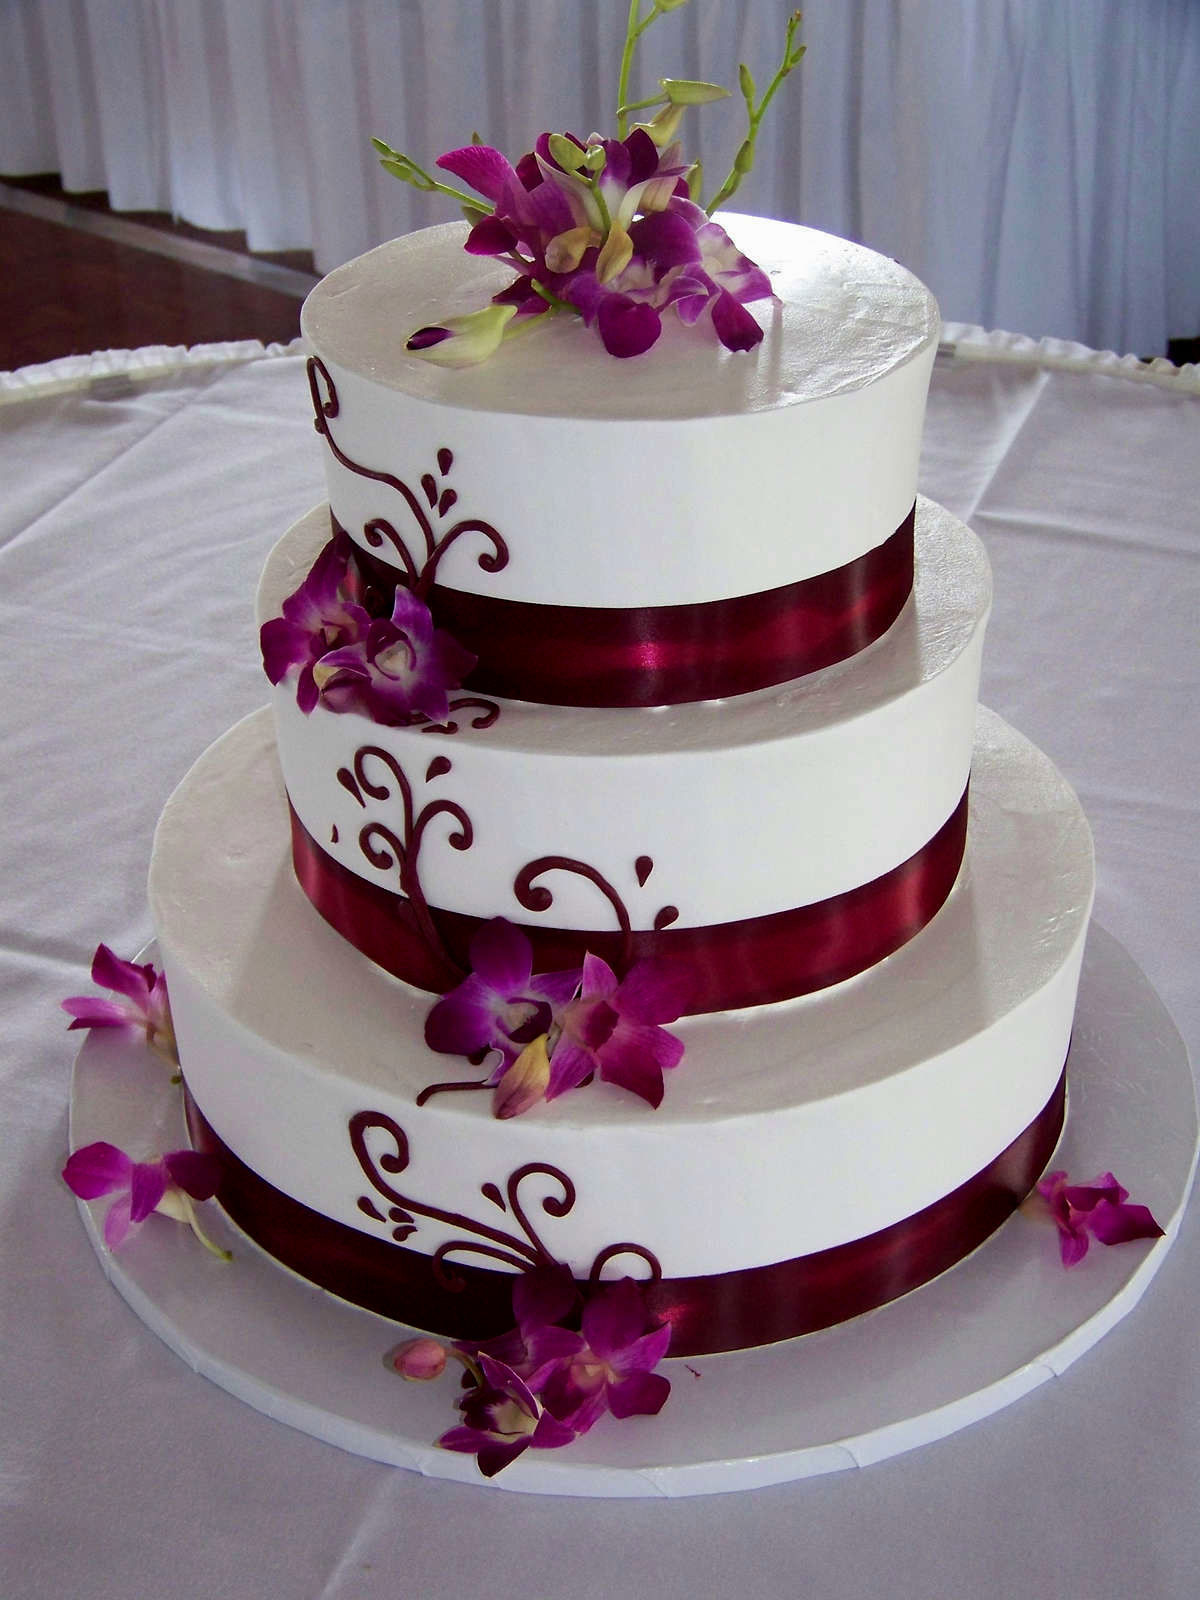 Wedding Cakes Bloomington Il the Best Ideas for Wedding Cakes Bloomington Il Idea In 2017